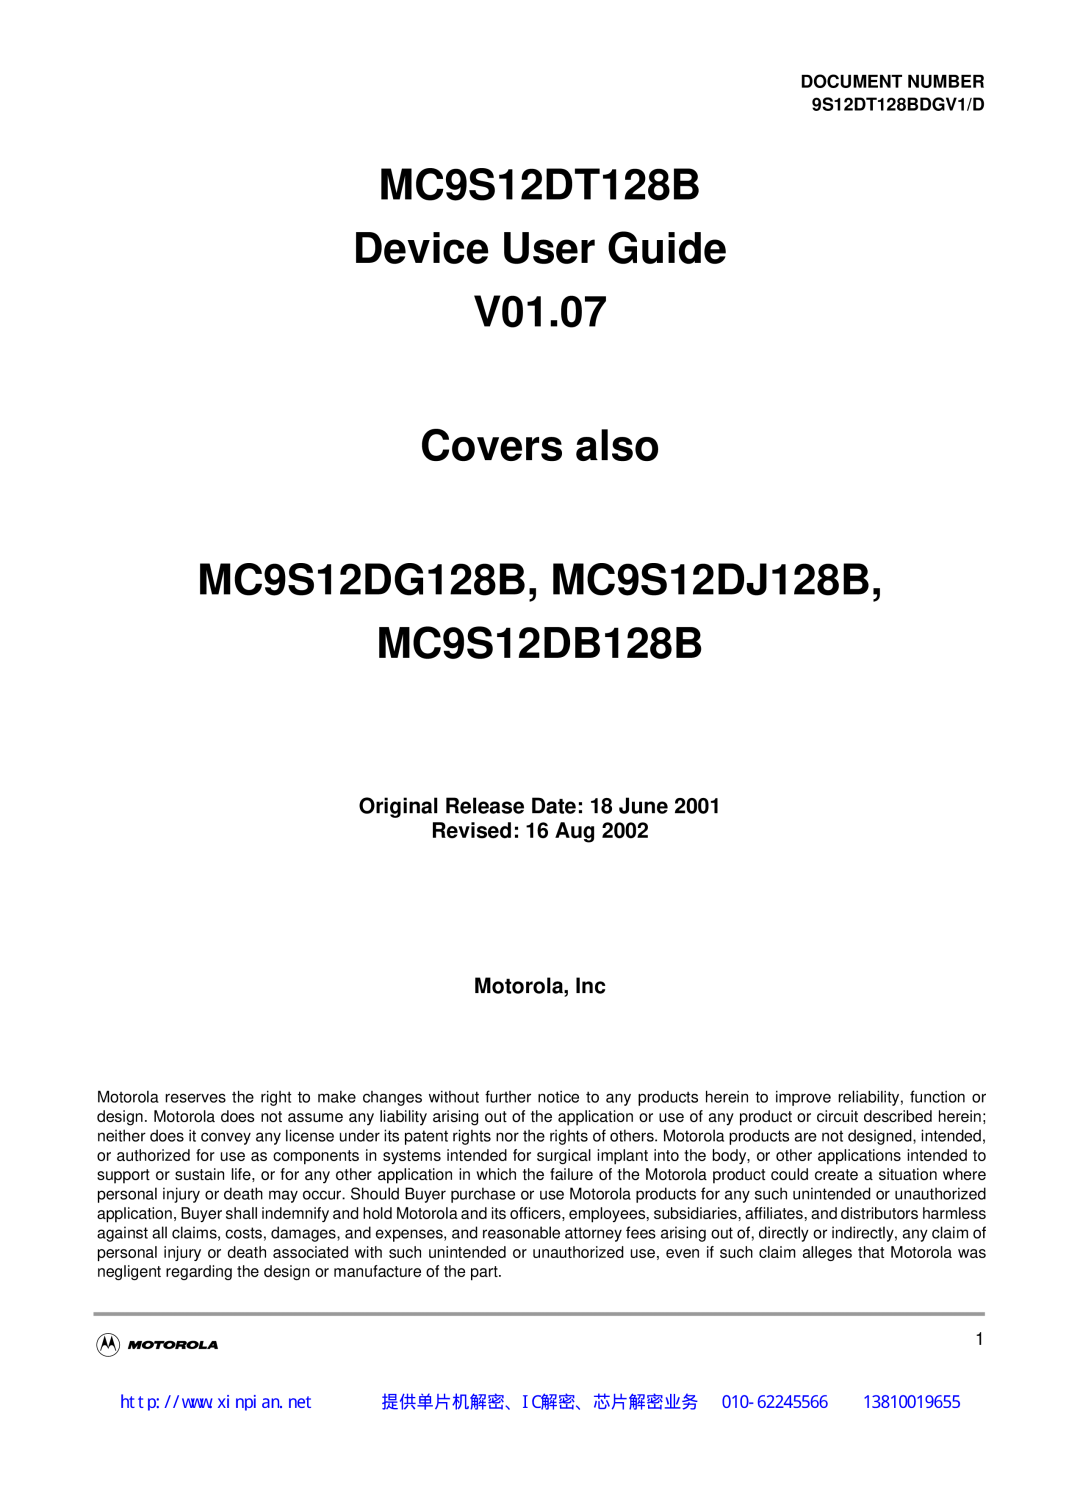 Motorola manual MC9S12DT128B Device User Guide V01.07 Covers also, MC9S12DG128B, MC9S12DJ128B MC9S12DB128B 